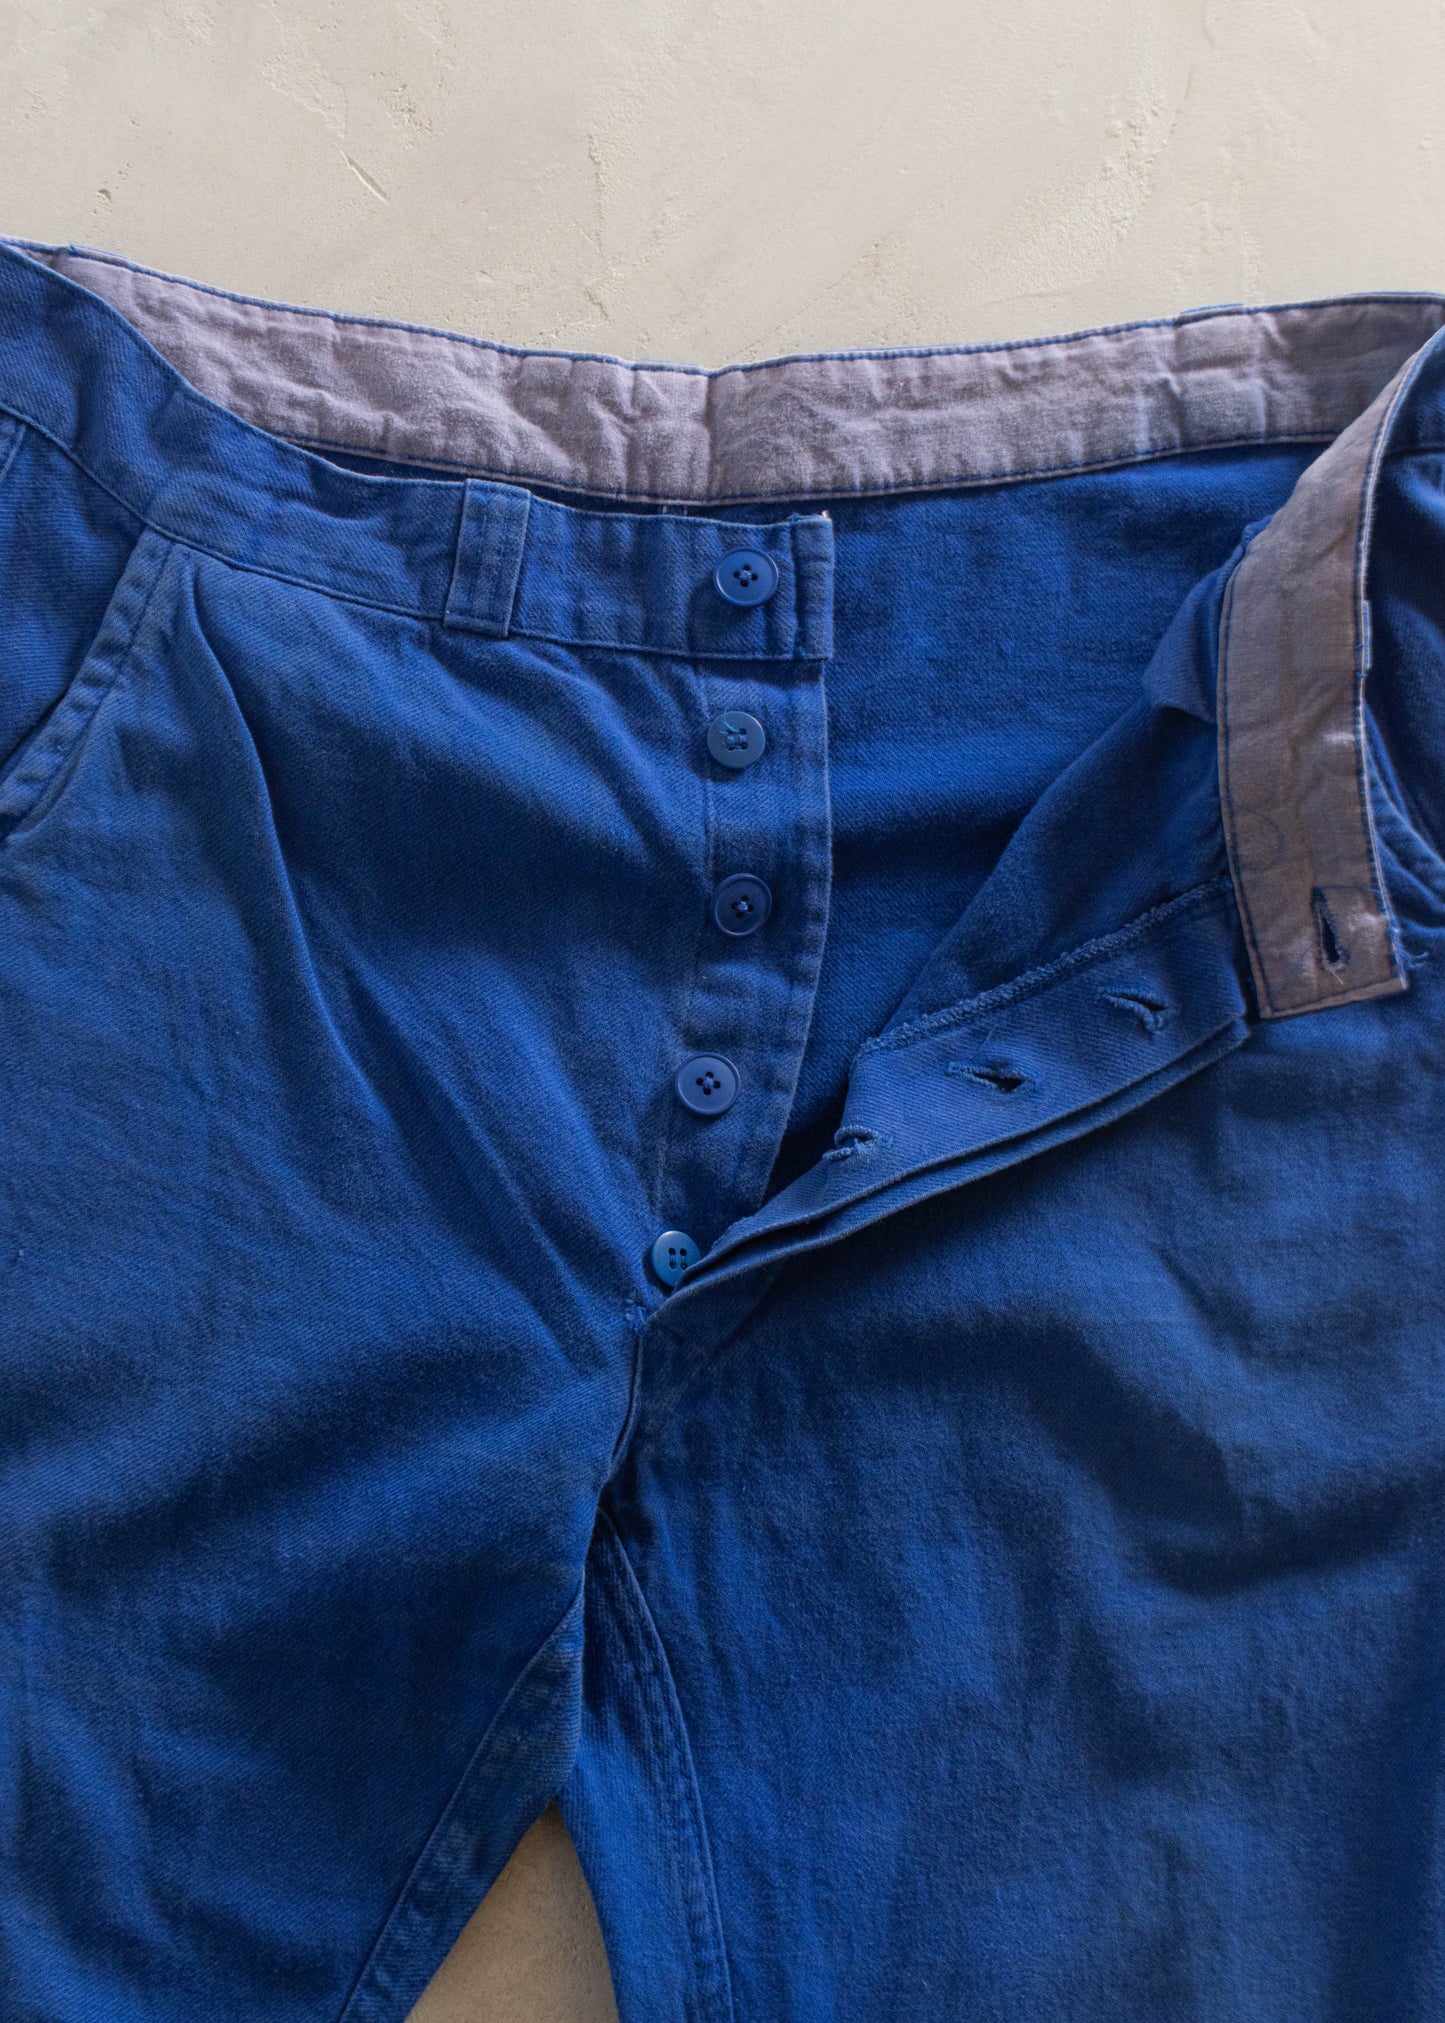 1980s French Workwear Chore Pants Size Women's 33 Men's 36